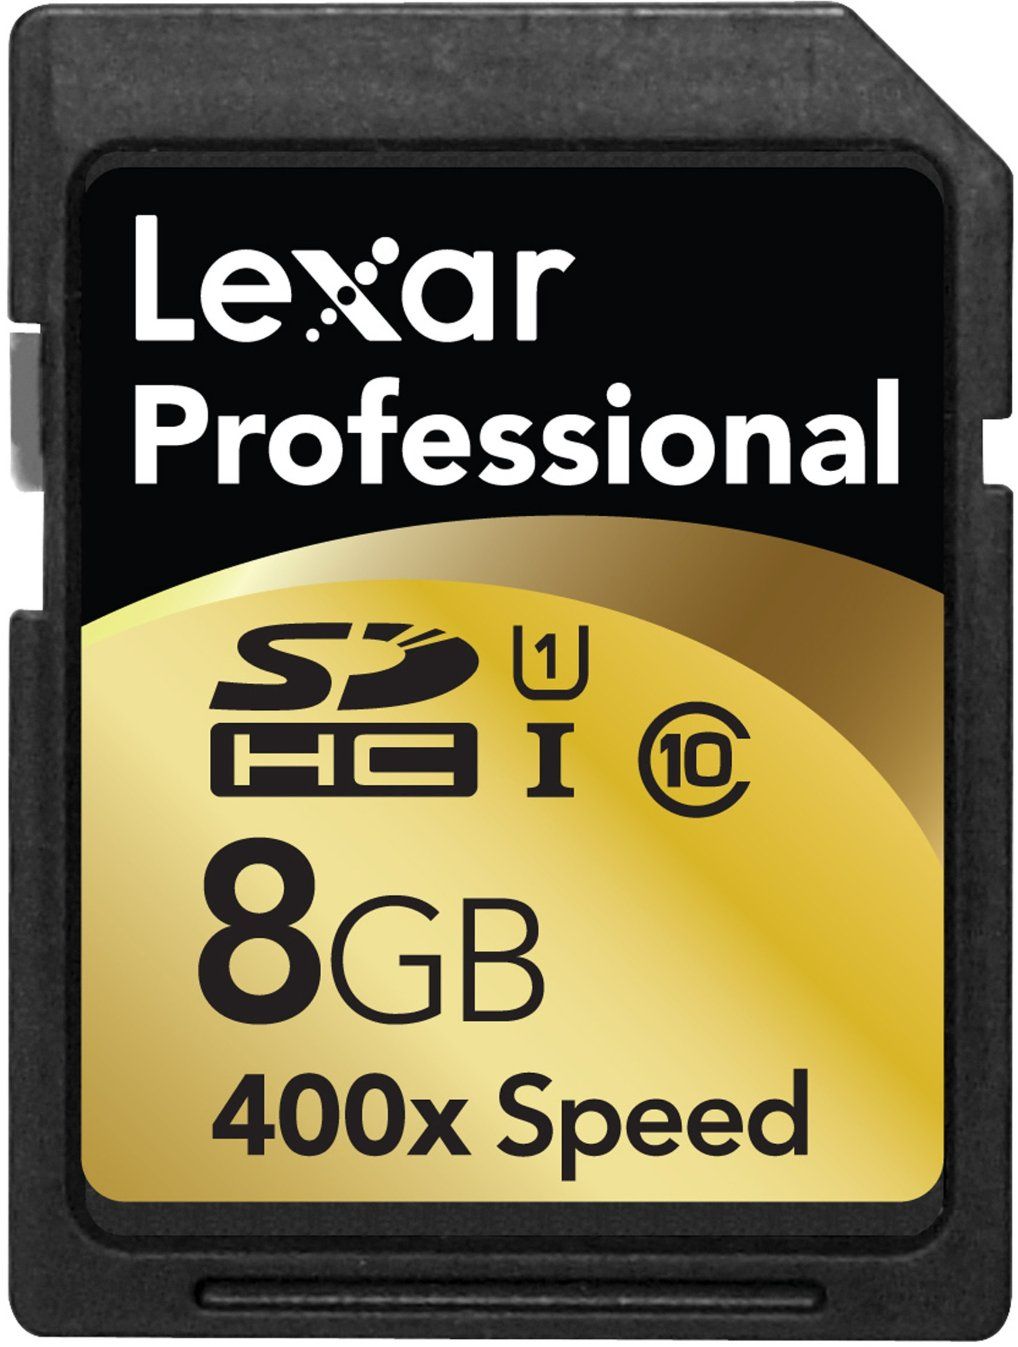 Professional 400x SDHC UHS-I CLASS 10 - 8GB